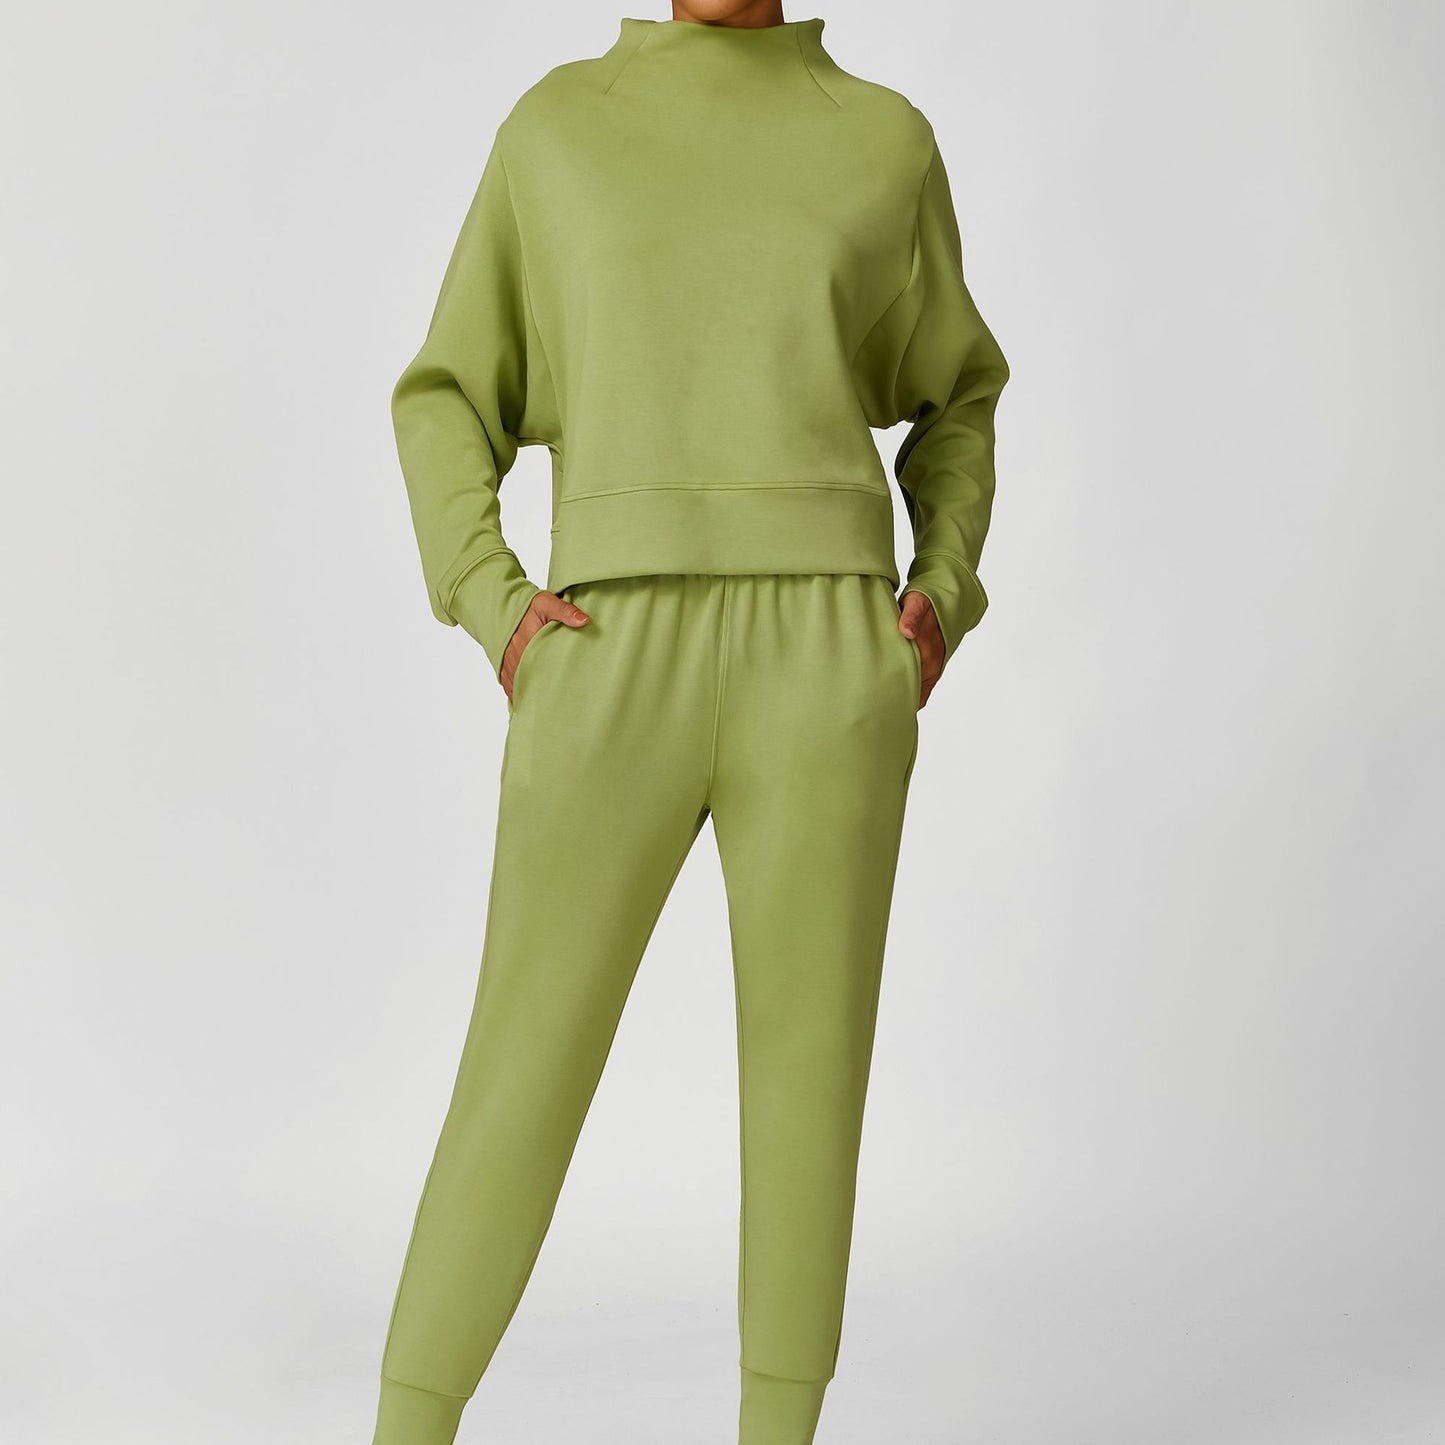 Solid color loose-fitting sweatshirt set